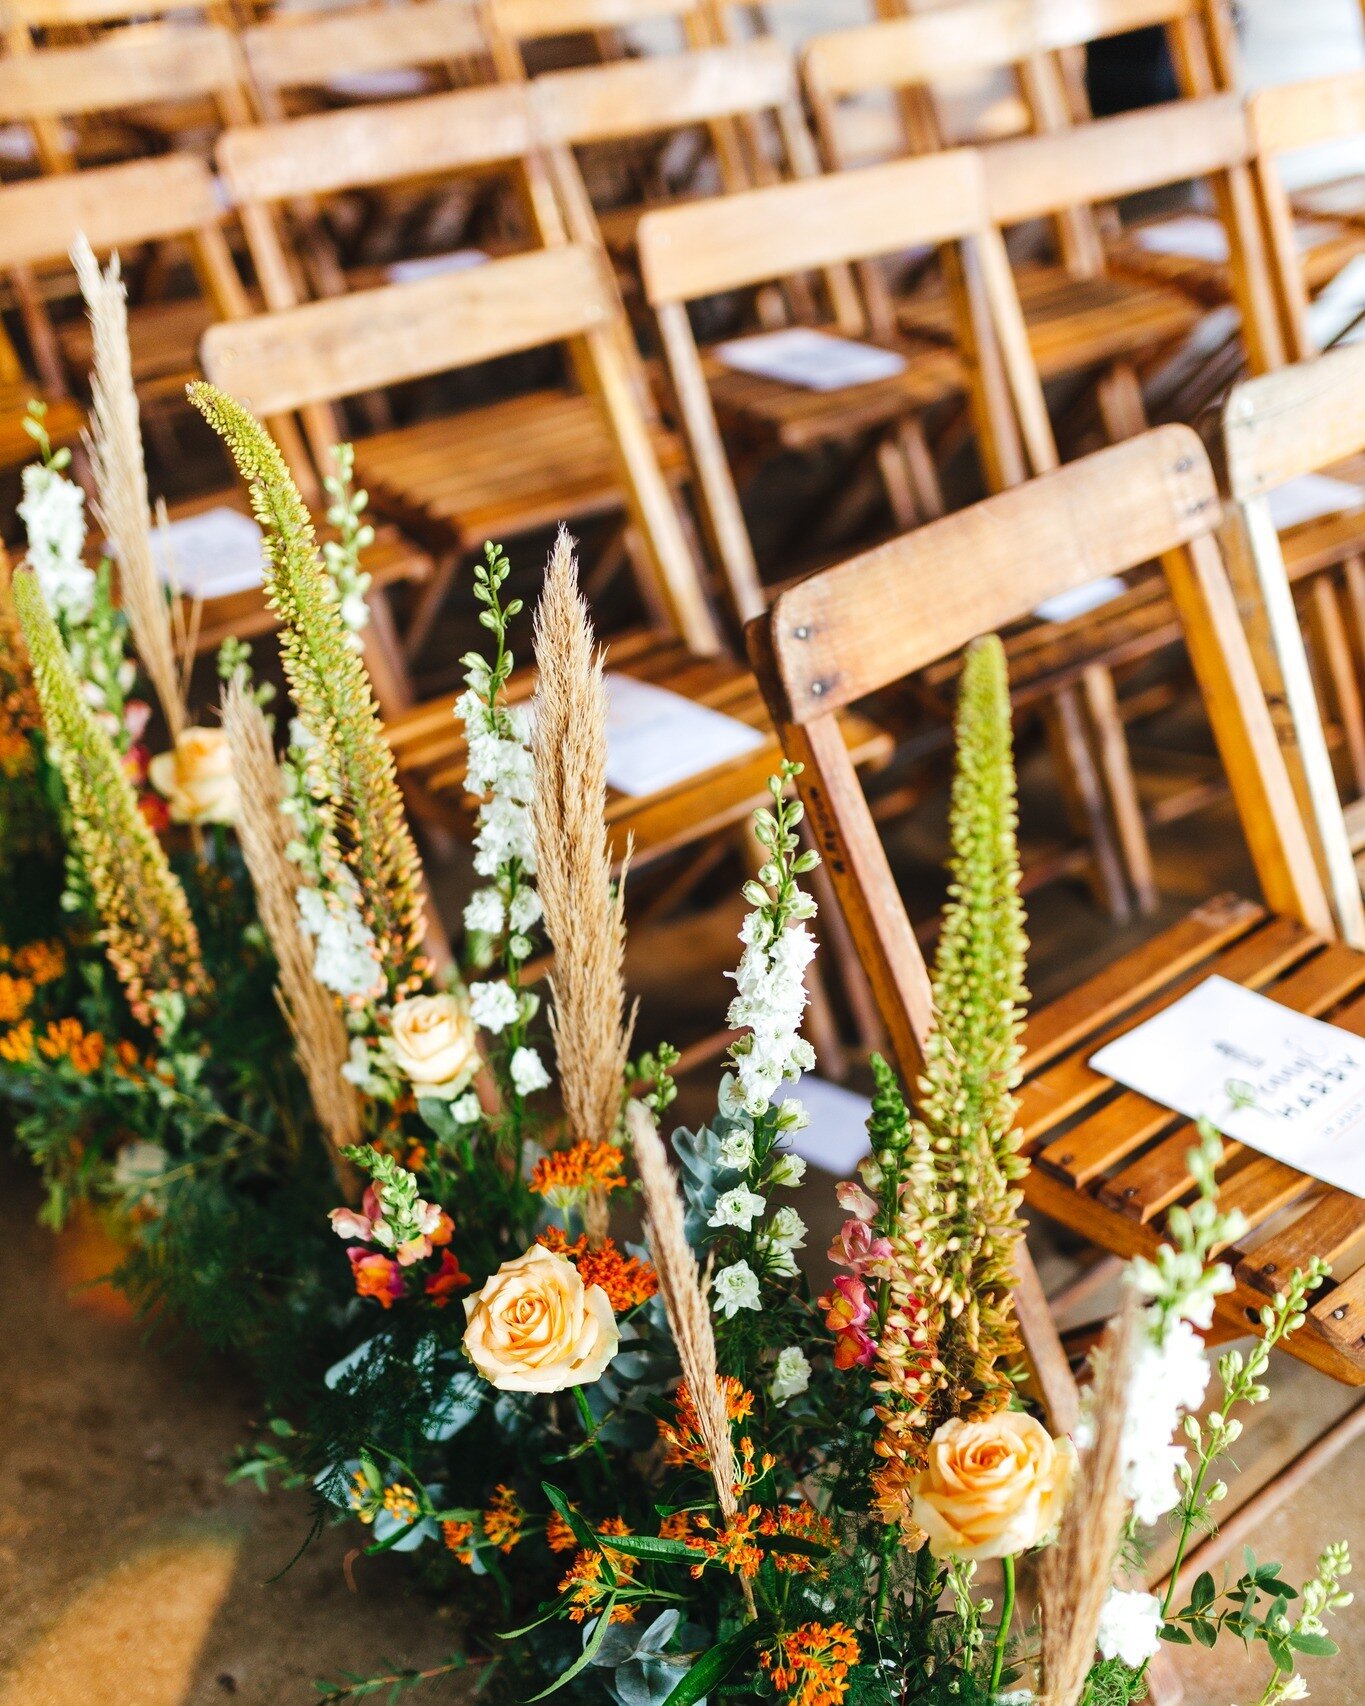 Ceremony ready! 😁

📸 - @kirstymackenziephotography 

#trinitybuoywharf #wedding #engaged #reception #weddingreception #weddingceremony #london #londonwedding #weddinginspiration #weddinginspo